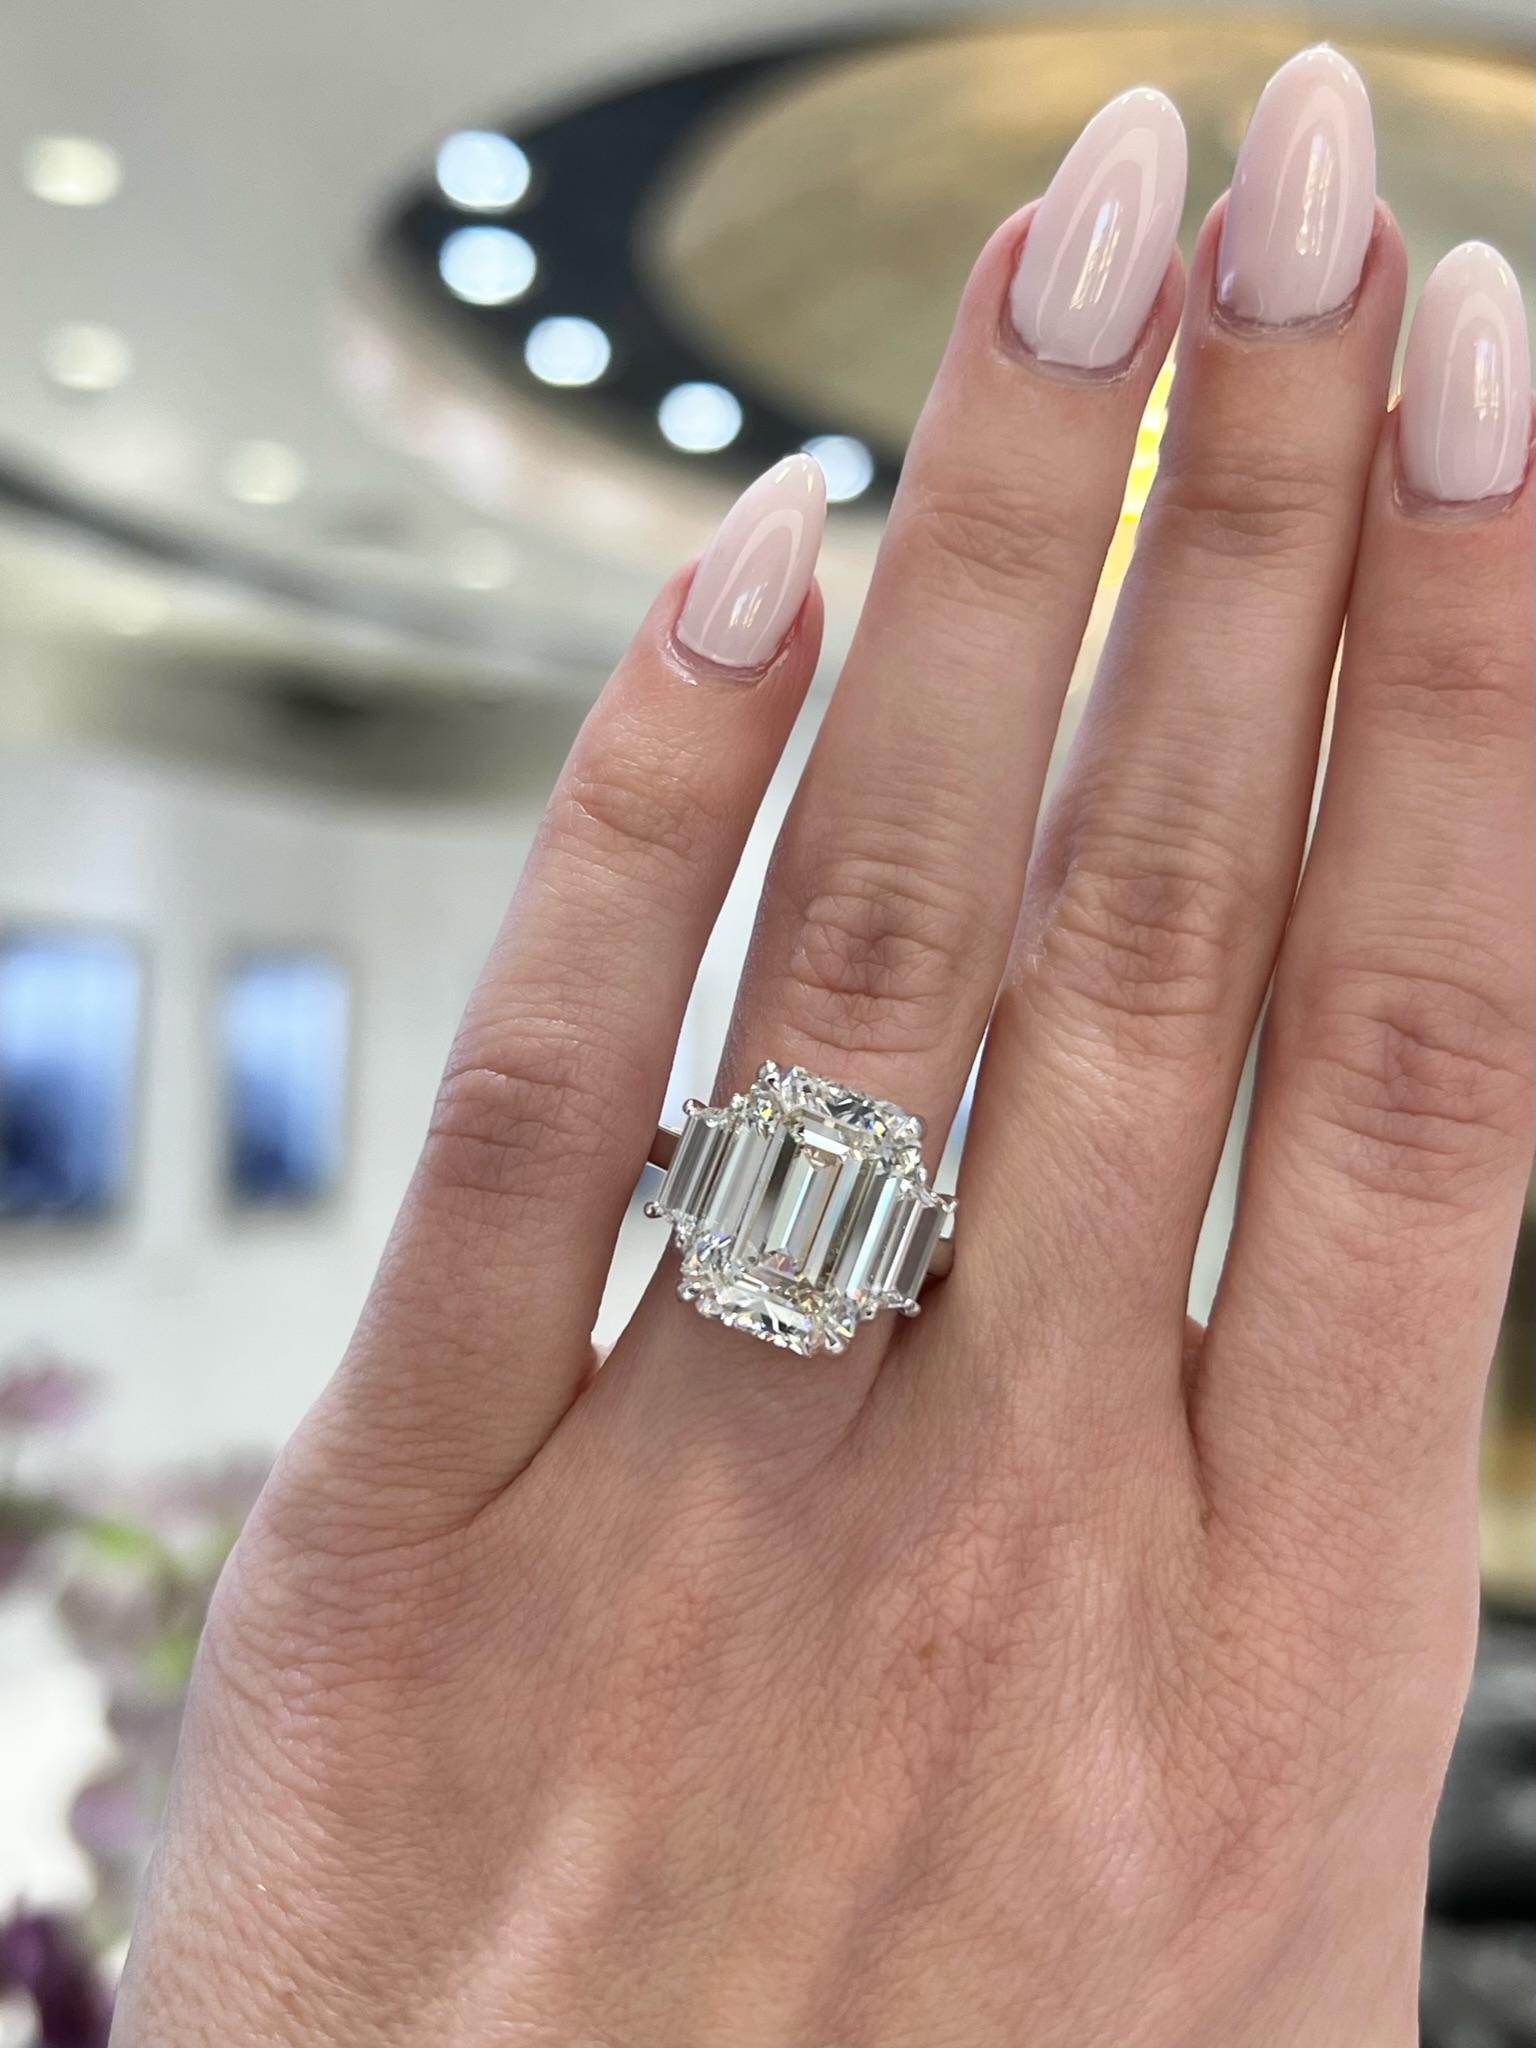 David Rosenberg 8.37 Carat Emerald Cut GIA Three Stone Diamond Engagement Ring For Sale 3